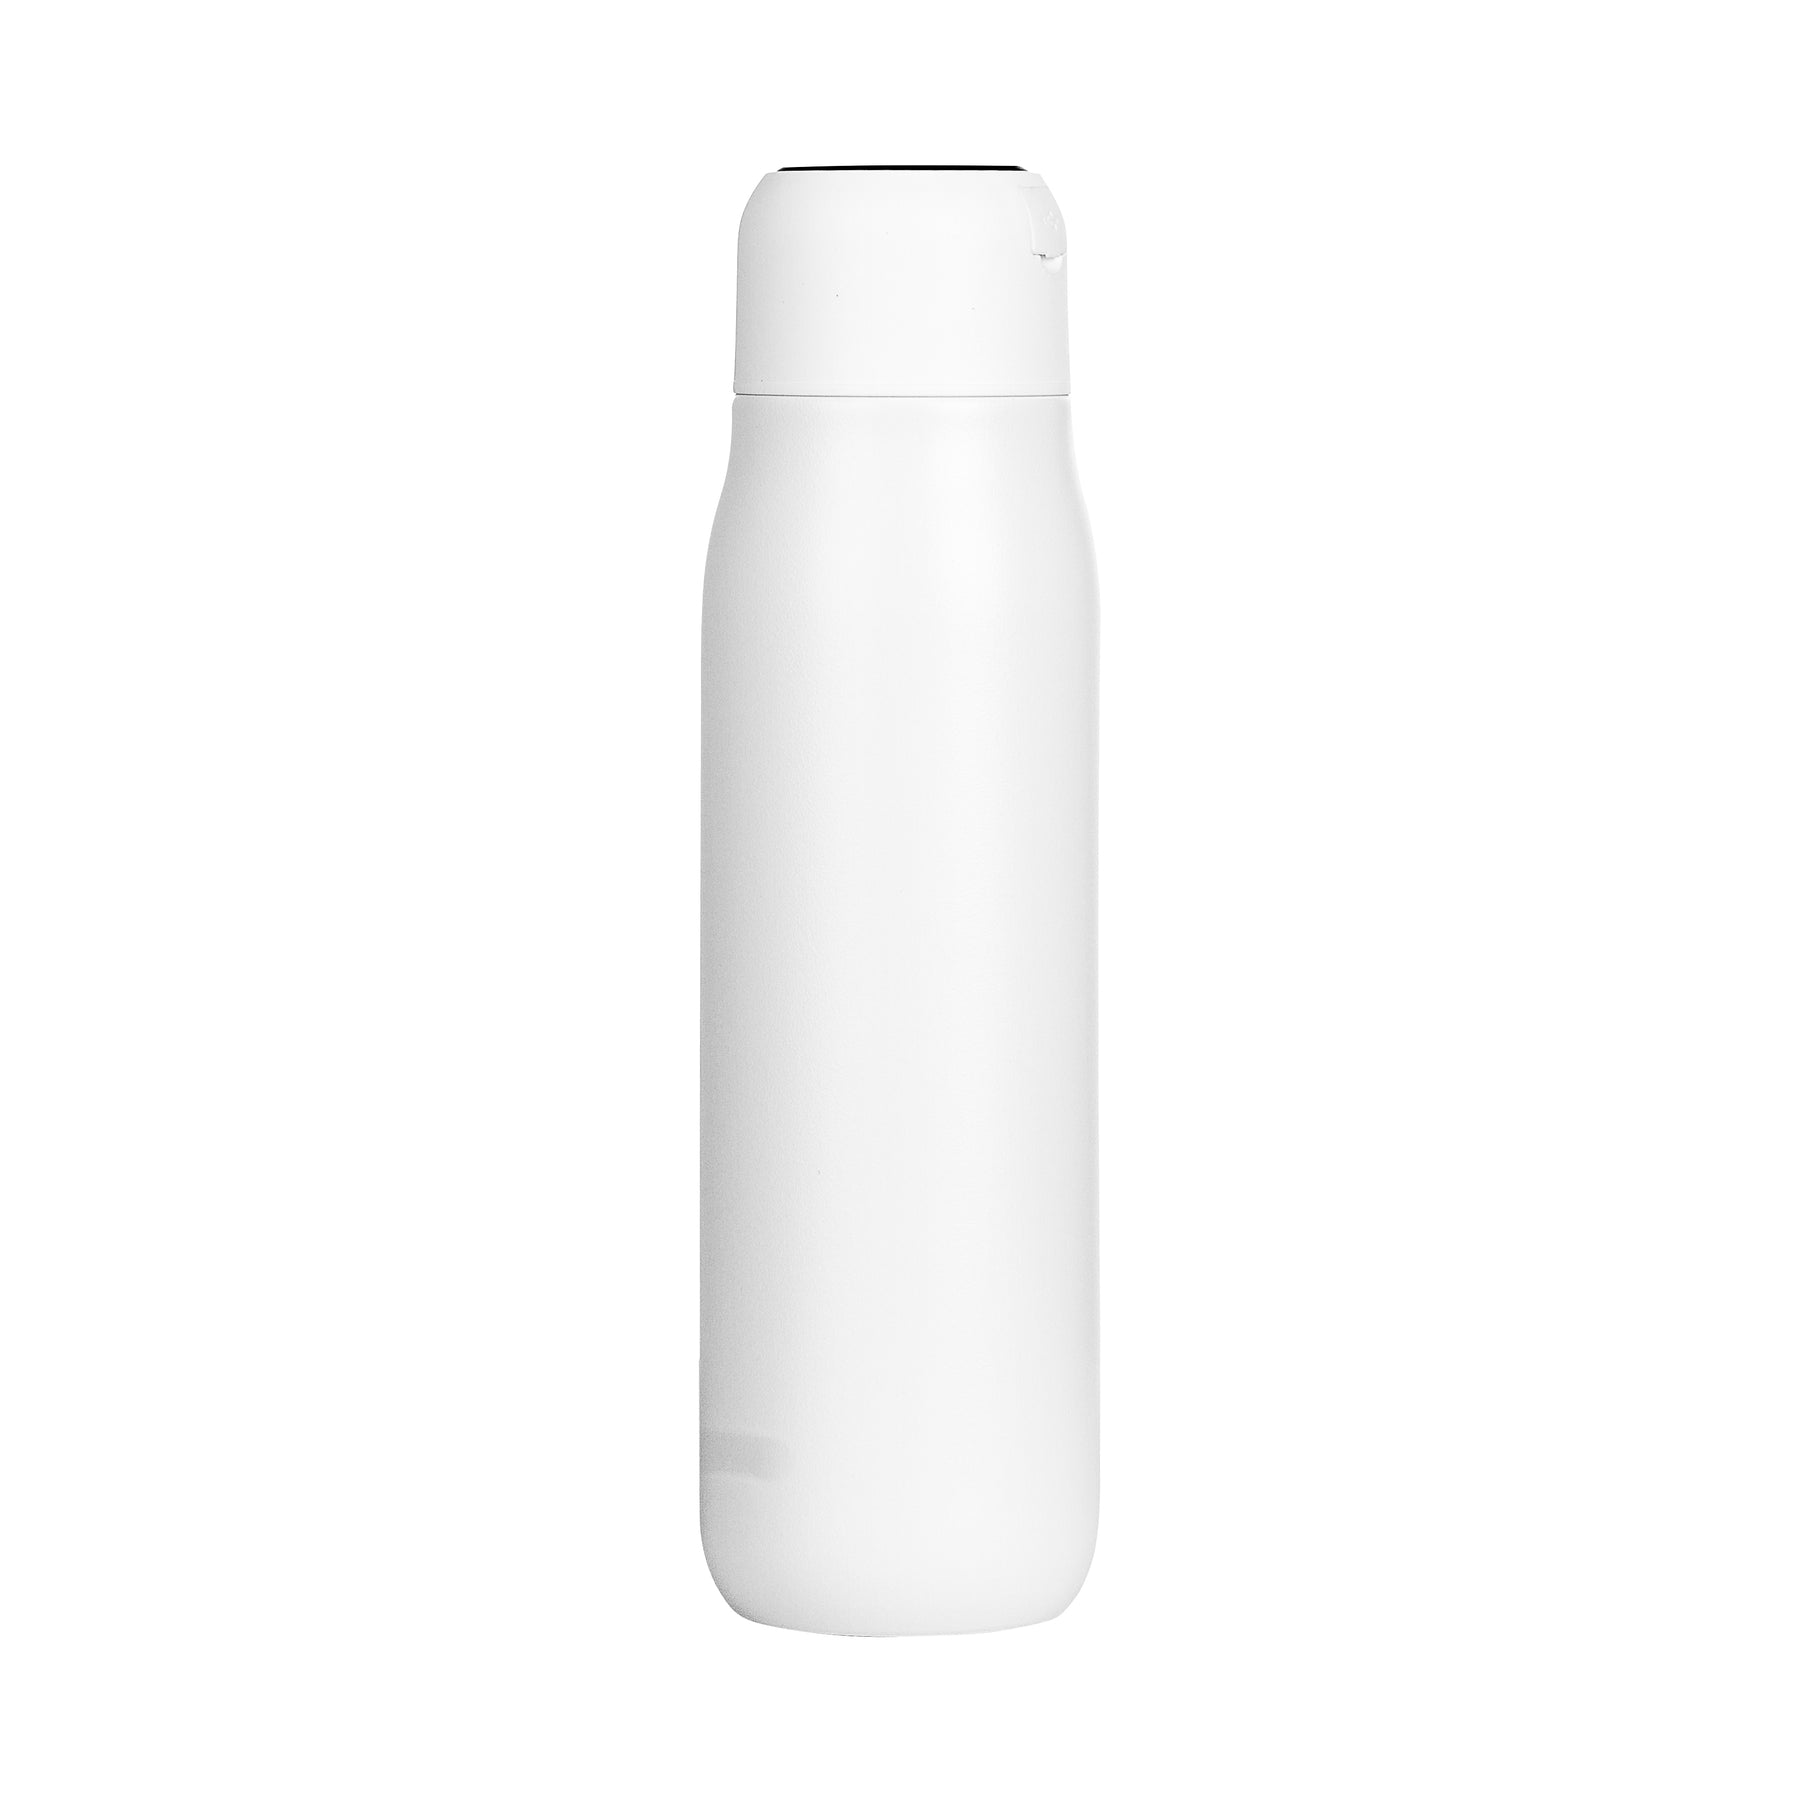 Purisoo+ water purifier bottle uses various antibacterial modular